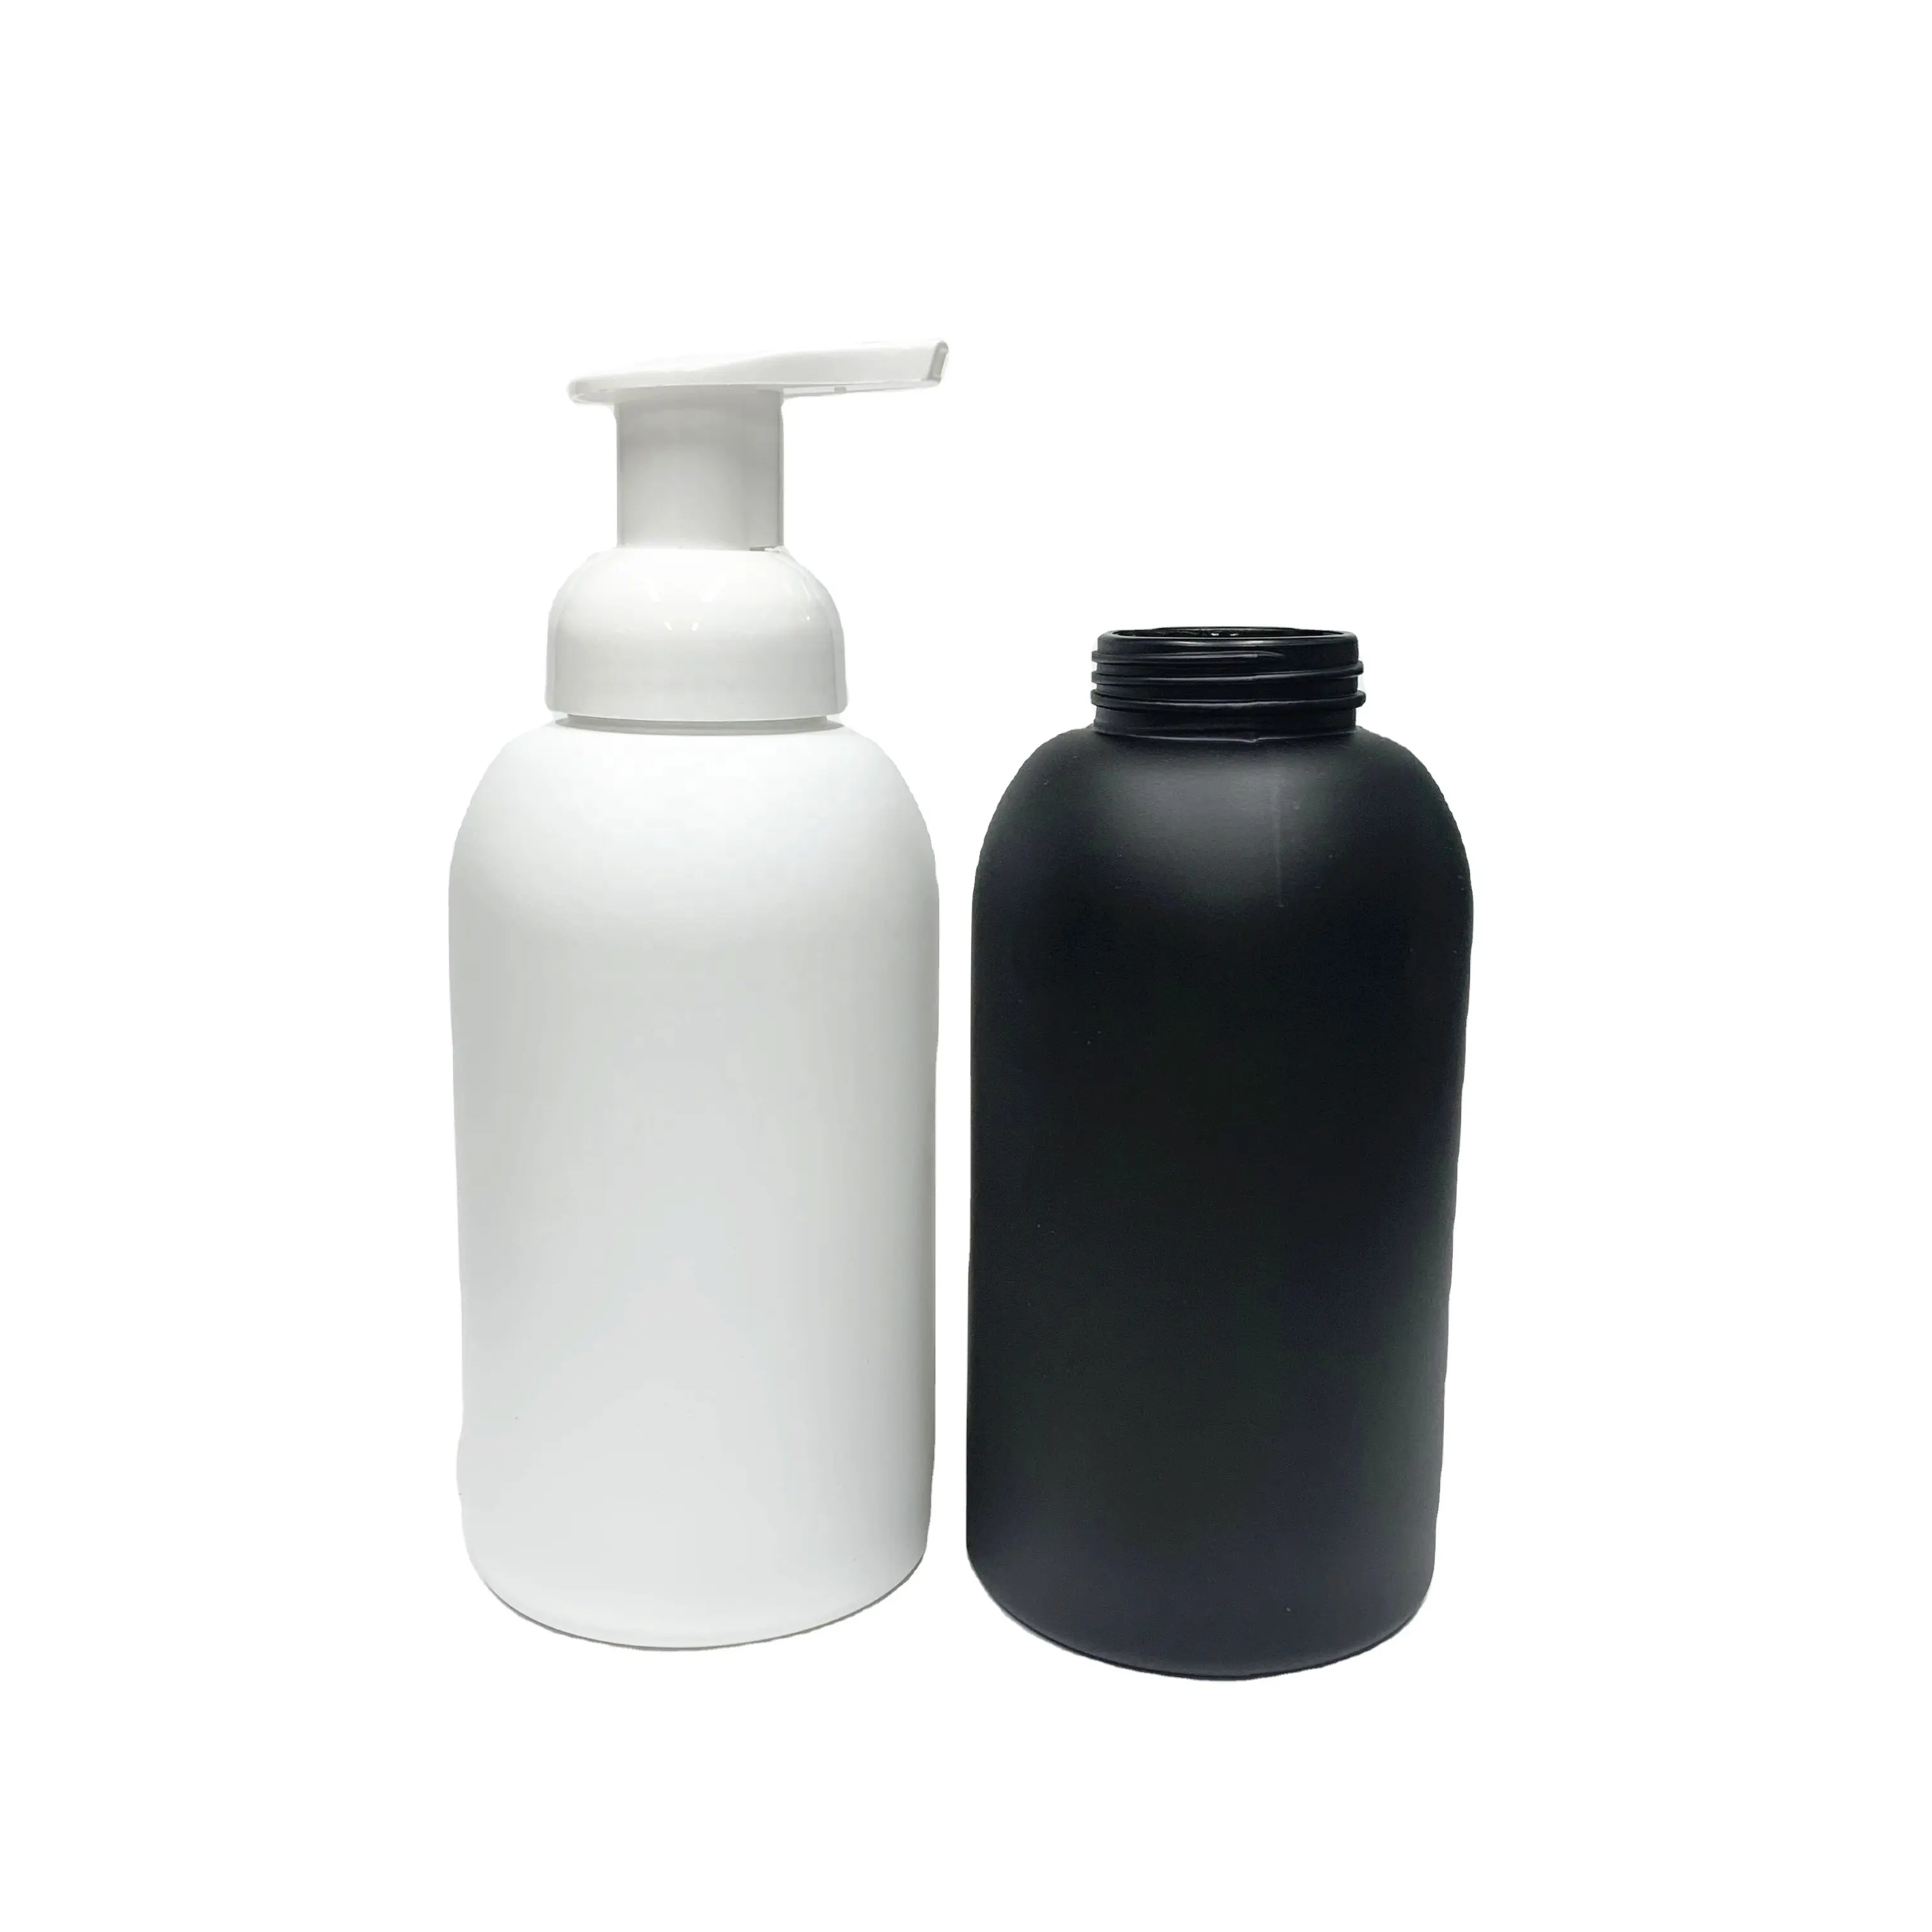 13oz 350ml matte white glass hand soap bottle with foam pump dispenser